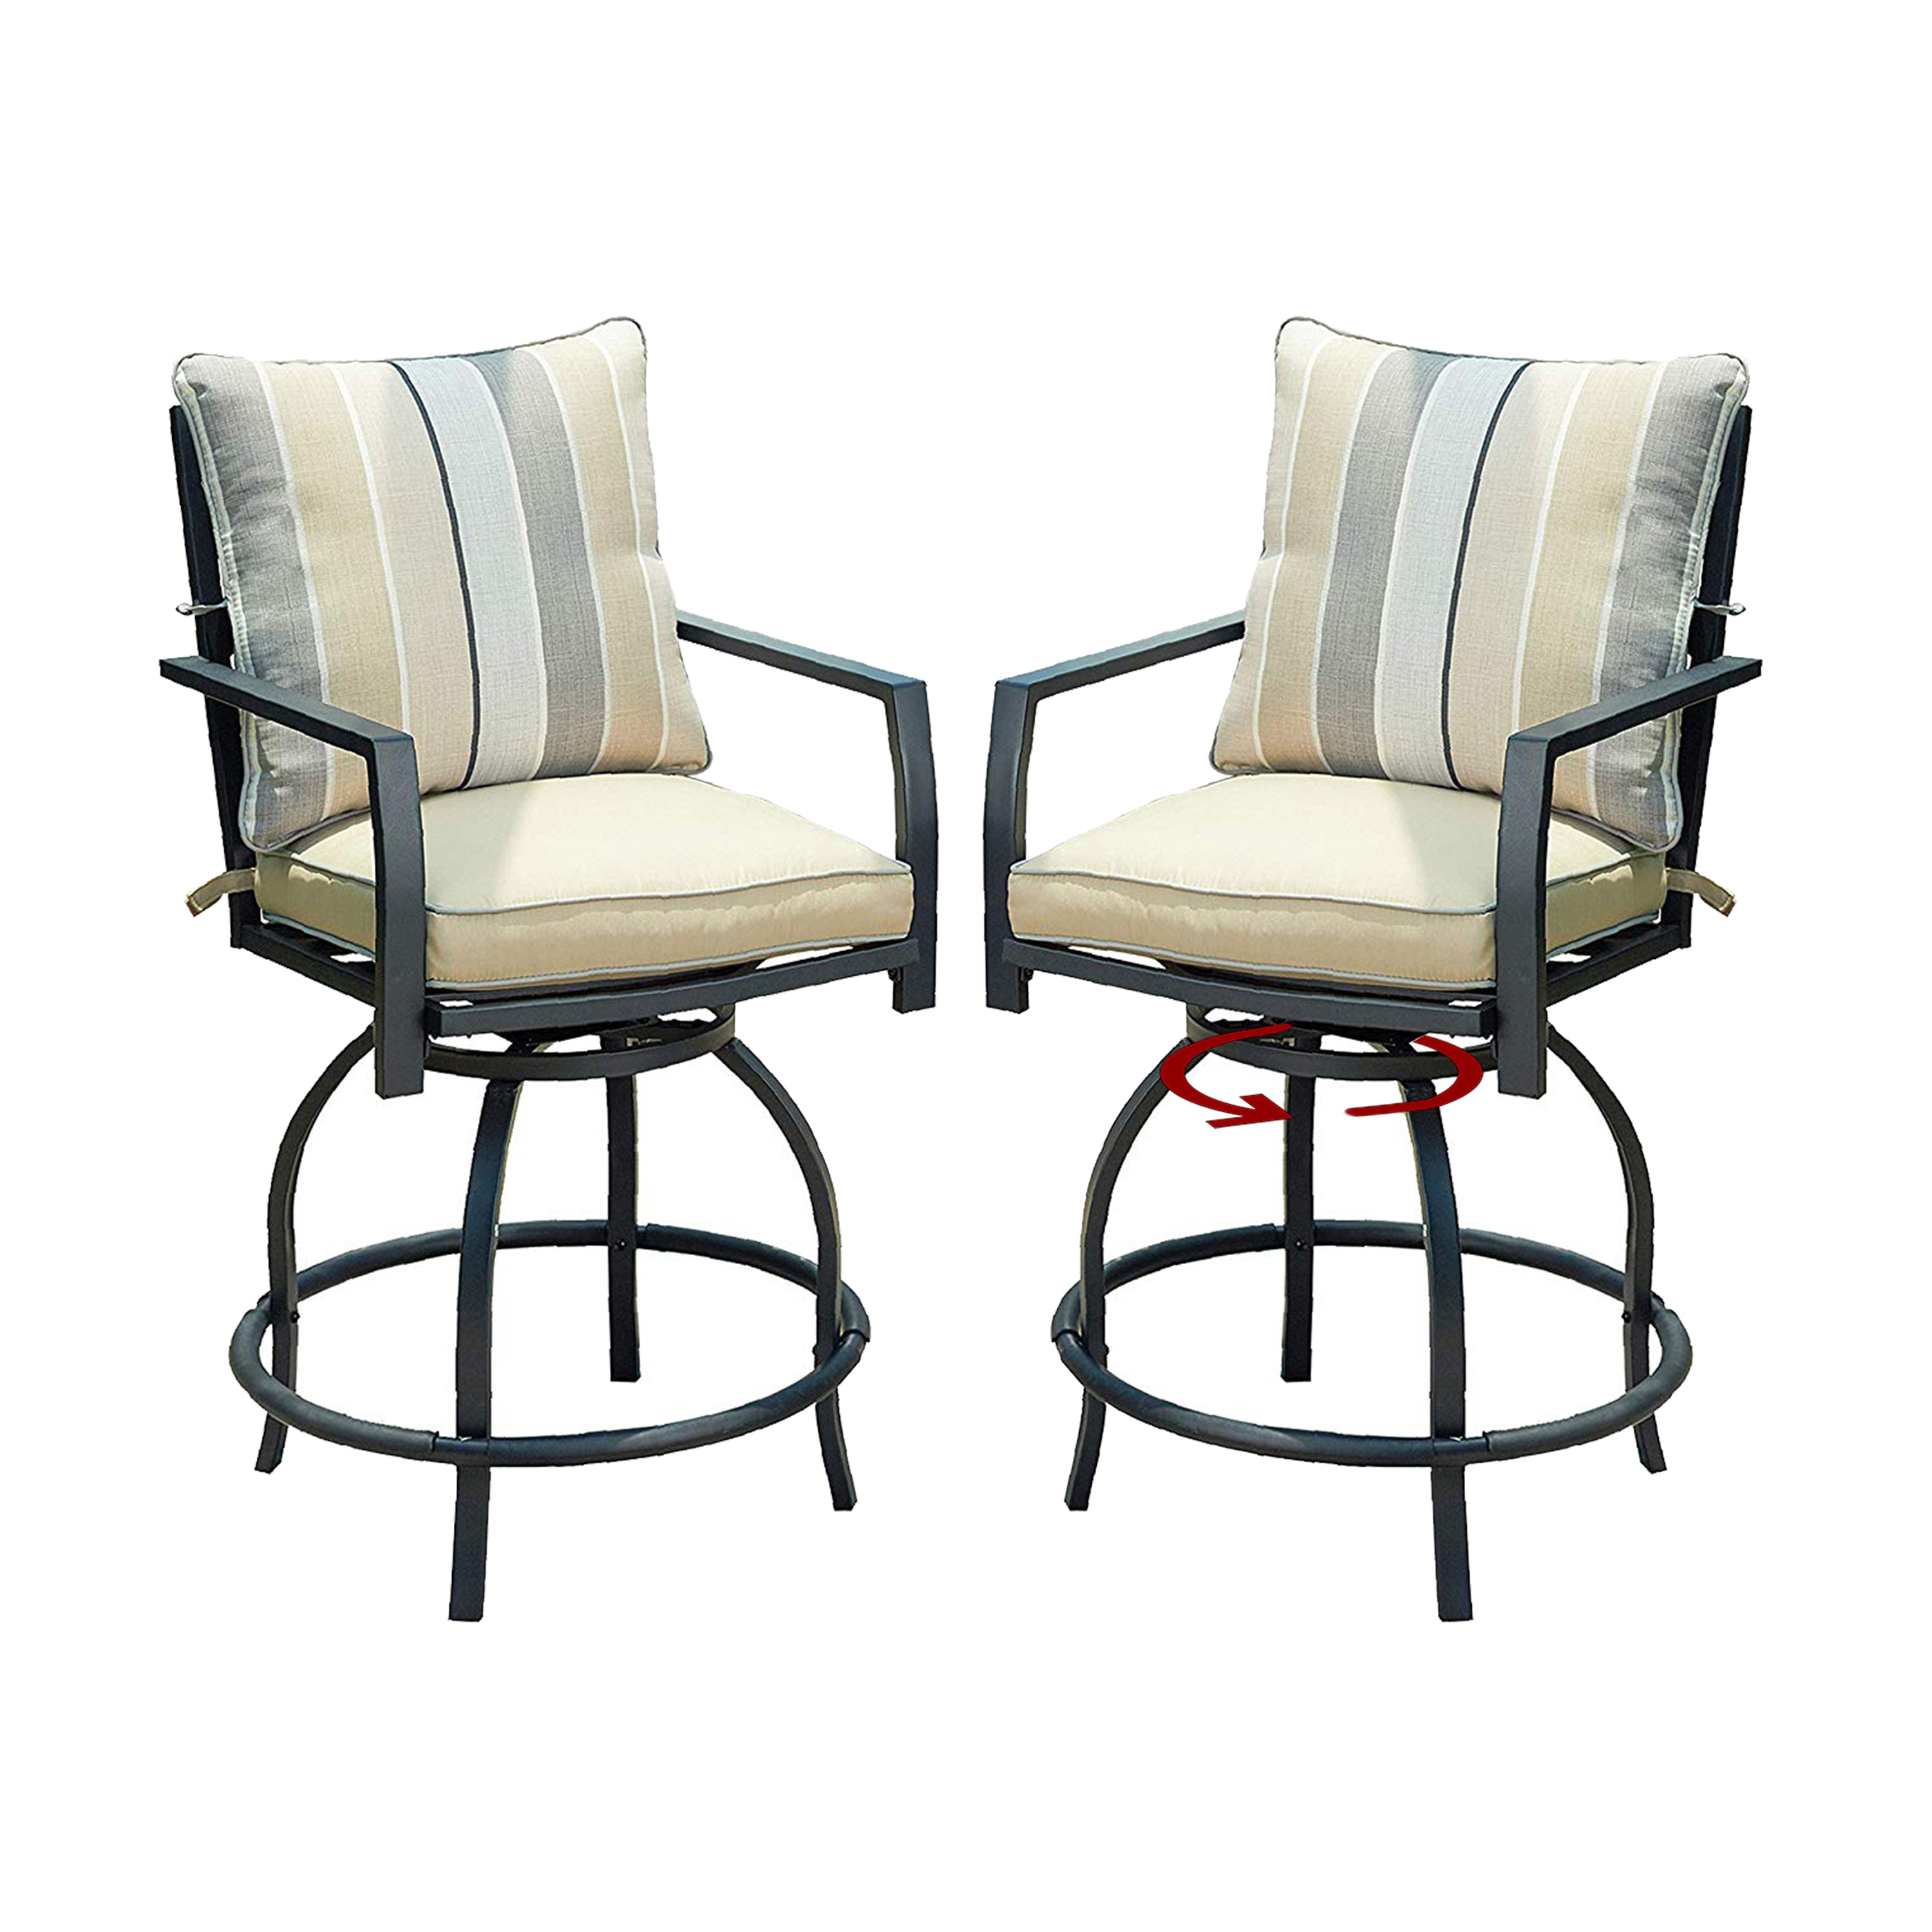 Metal Frame Swivel Bar Stool Chair, Bar Height Swivel Stools With Backs Patio